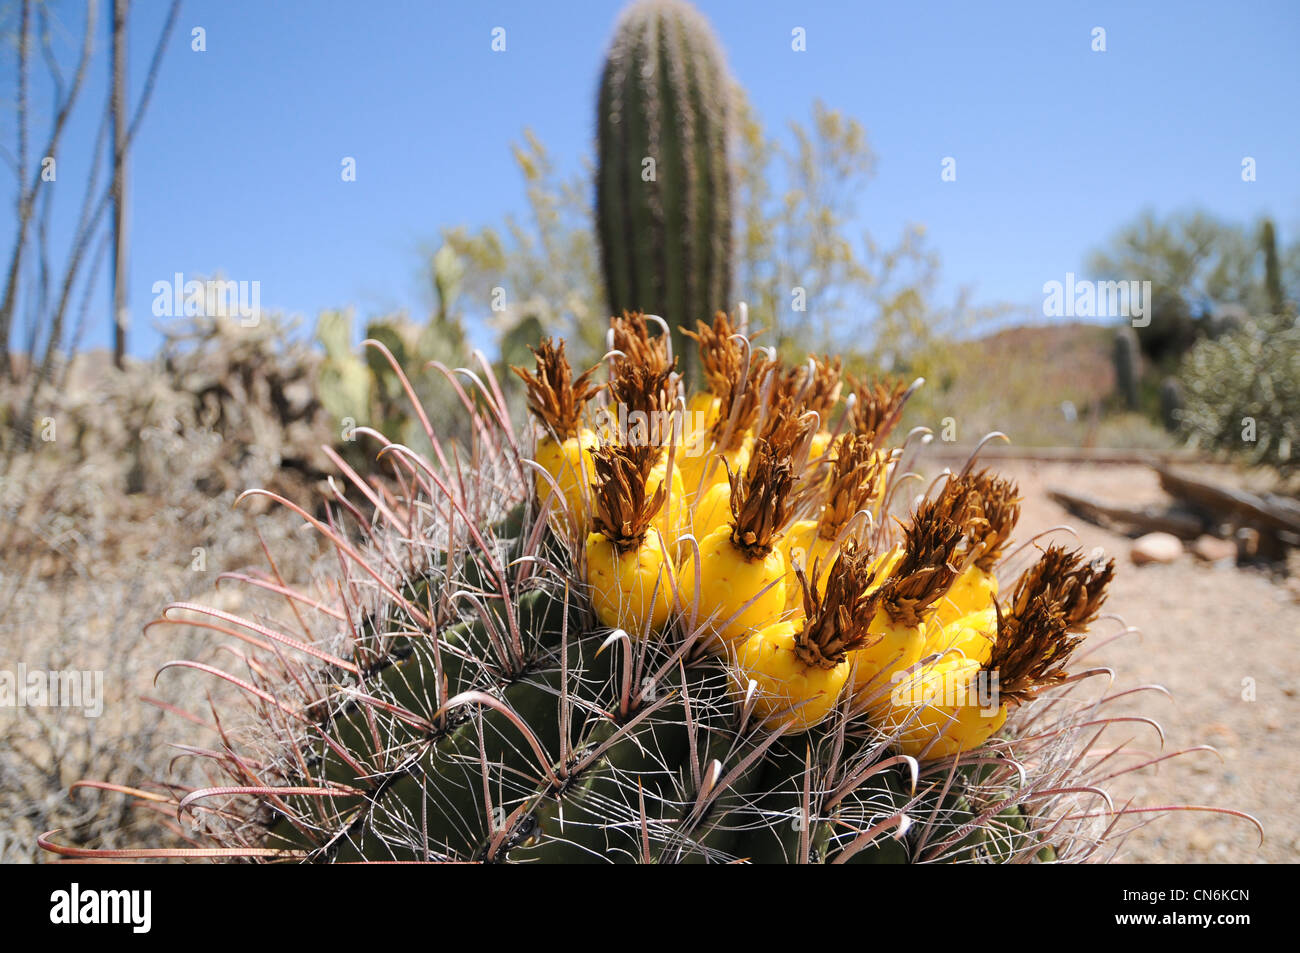 Fishhook barrel cactus with yellow fruit and saguaro cactus against blue sky in Sonoran desert at Saguaro National Park Stock Photo